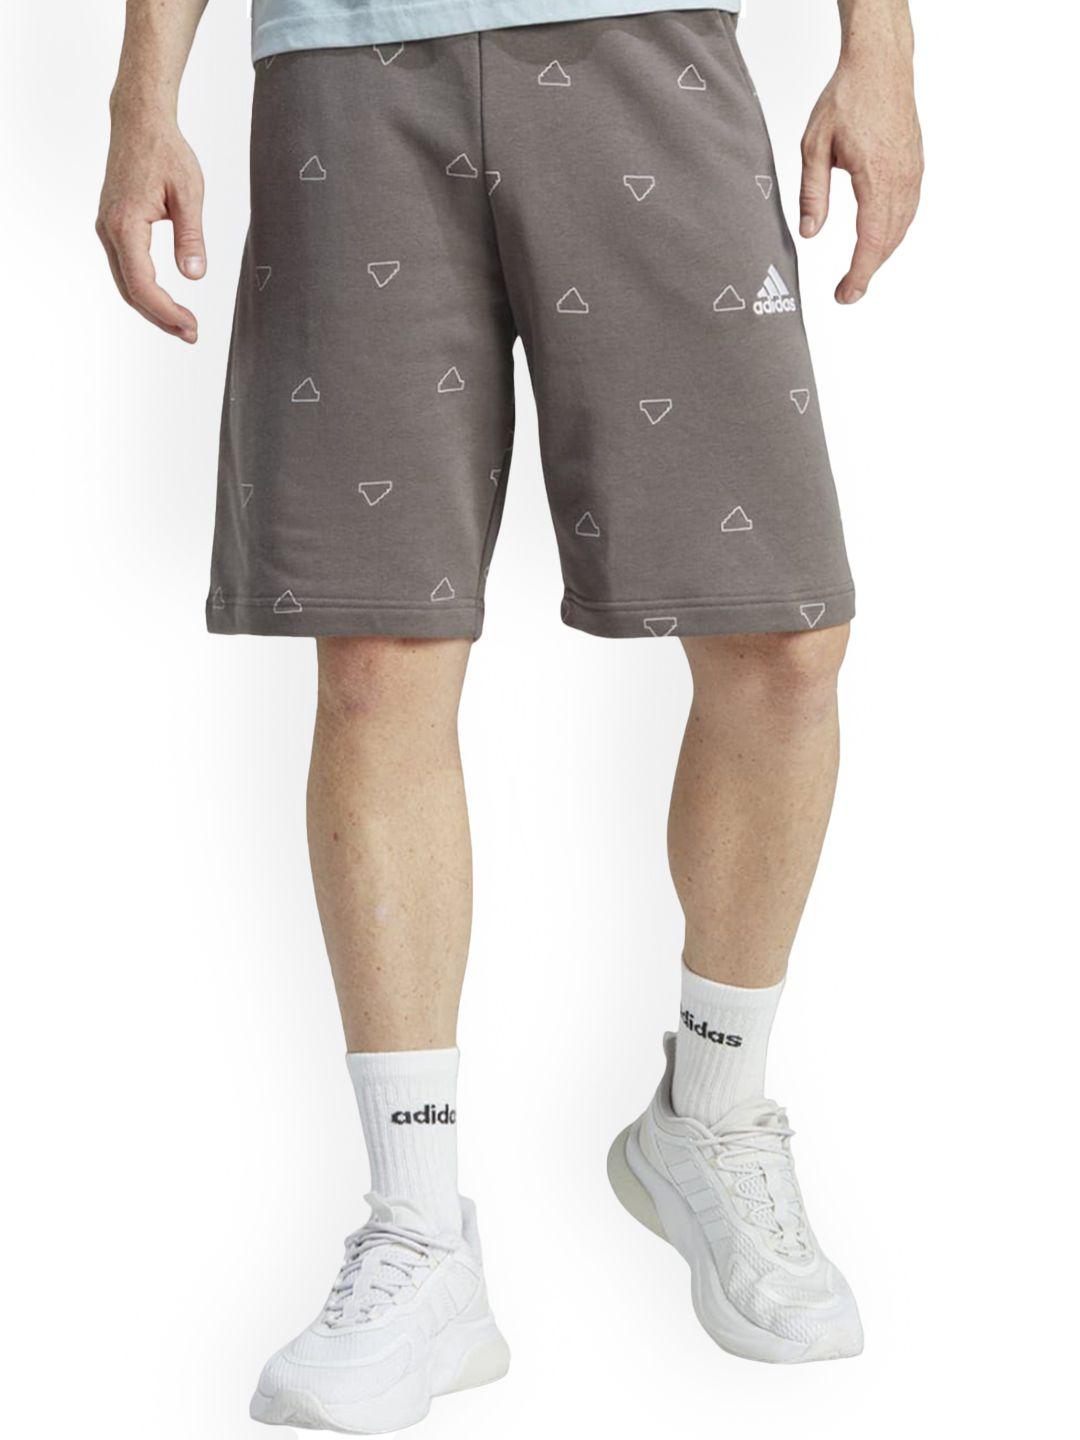 adidas men mngrm shrt ft conversational printed cotton training shorts